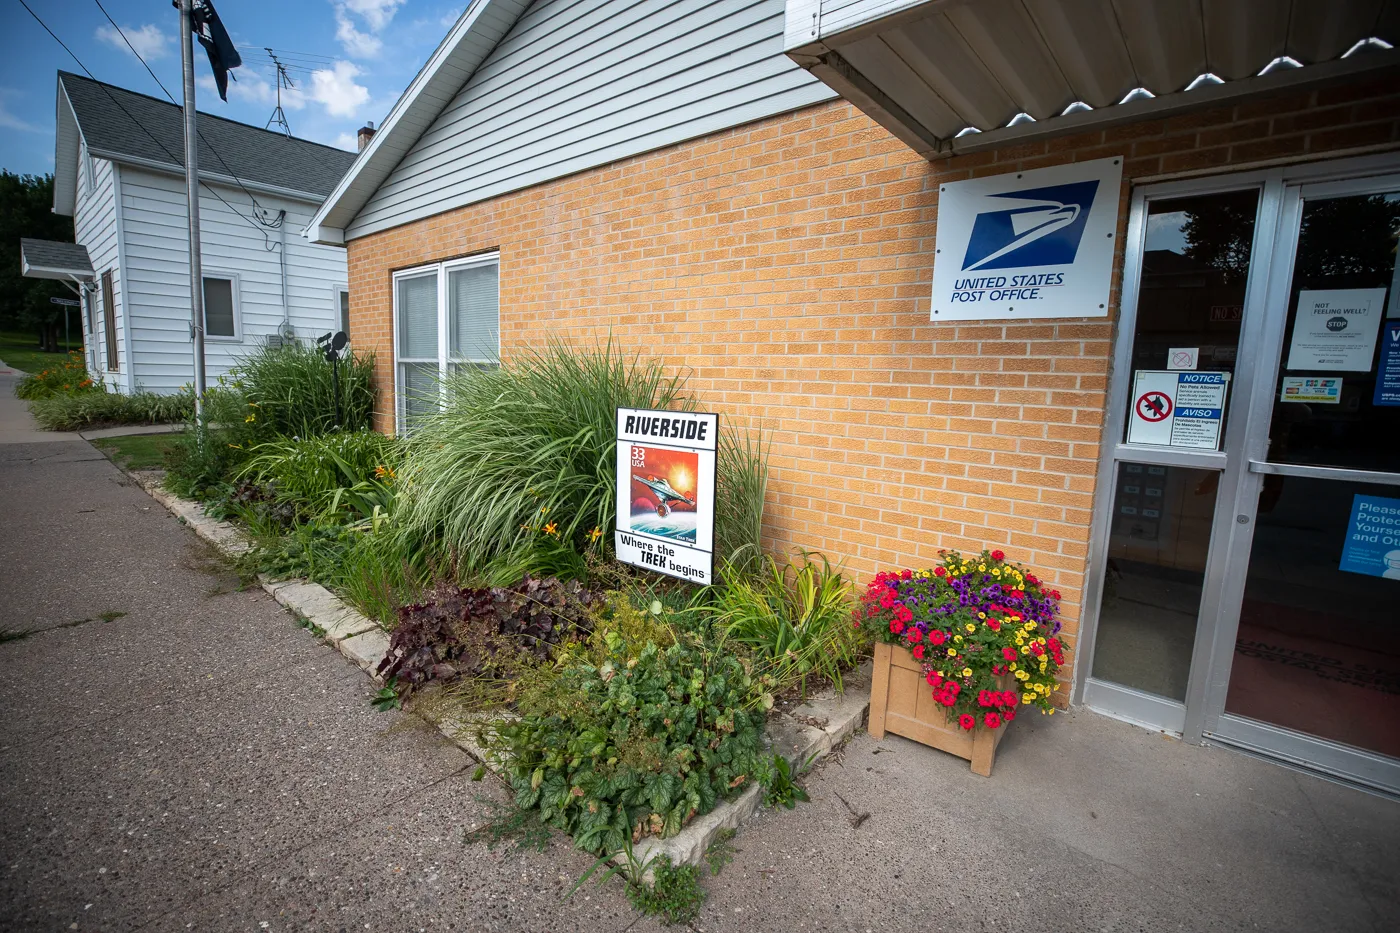 Riverside, Iowa post office - where the Trek Begins stamp